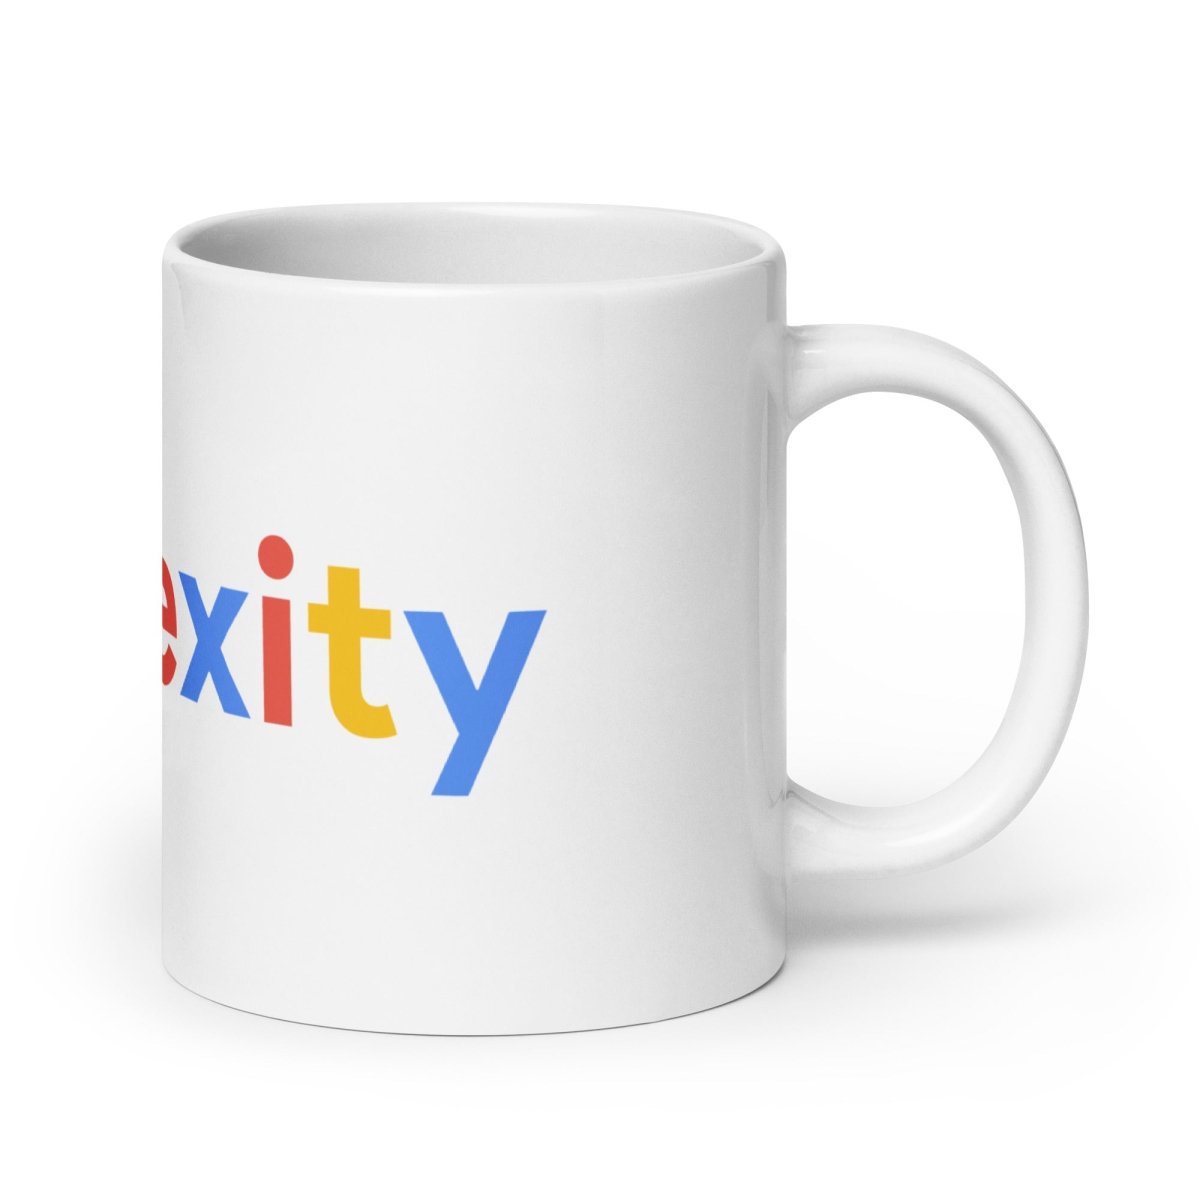 Perplexity Search Logo White Glossy Mug - 11 oz - AI Store